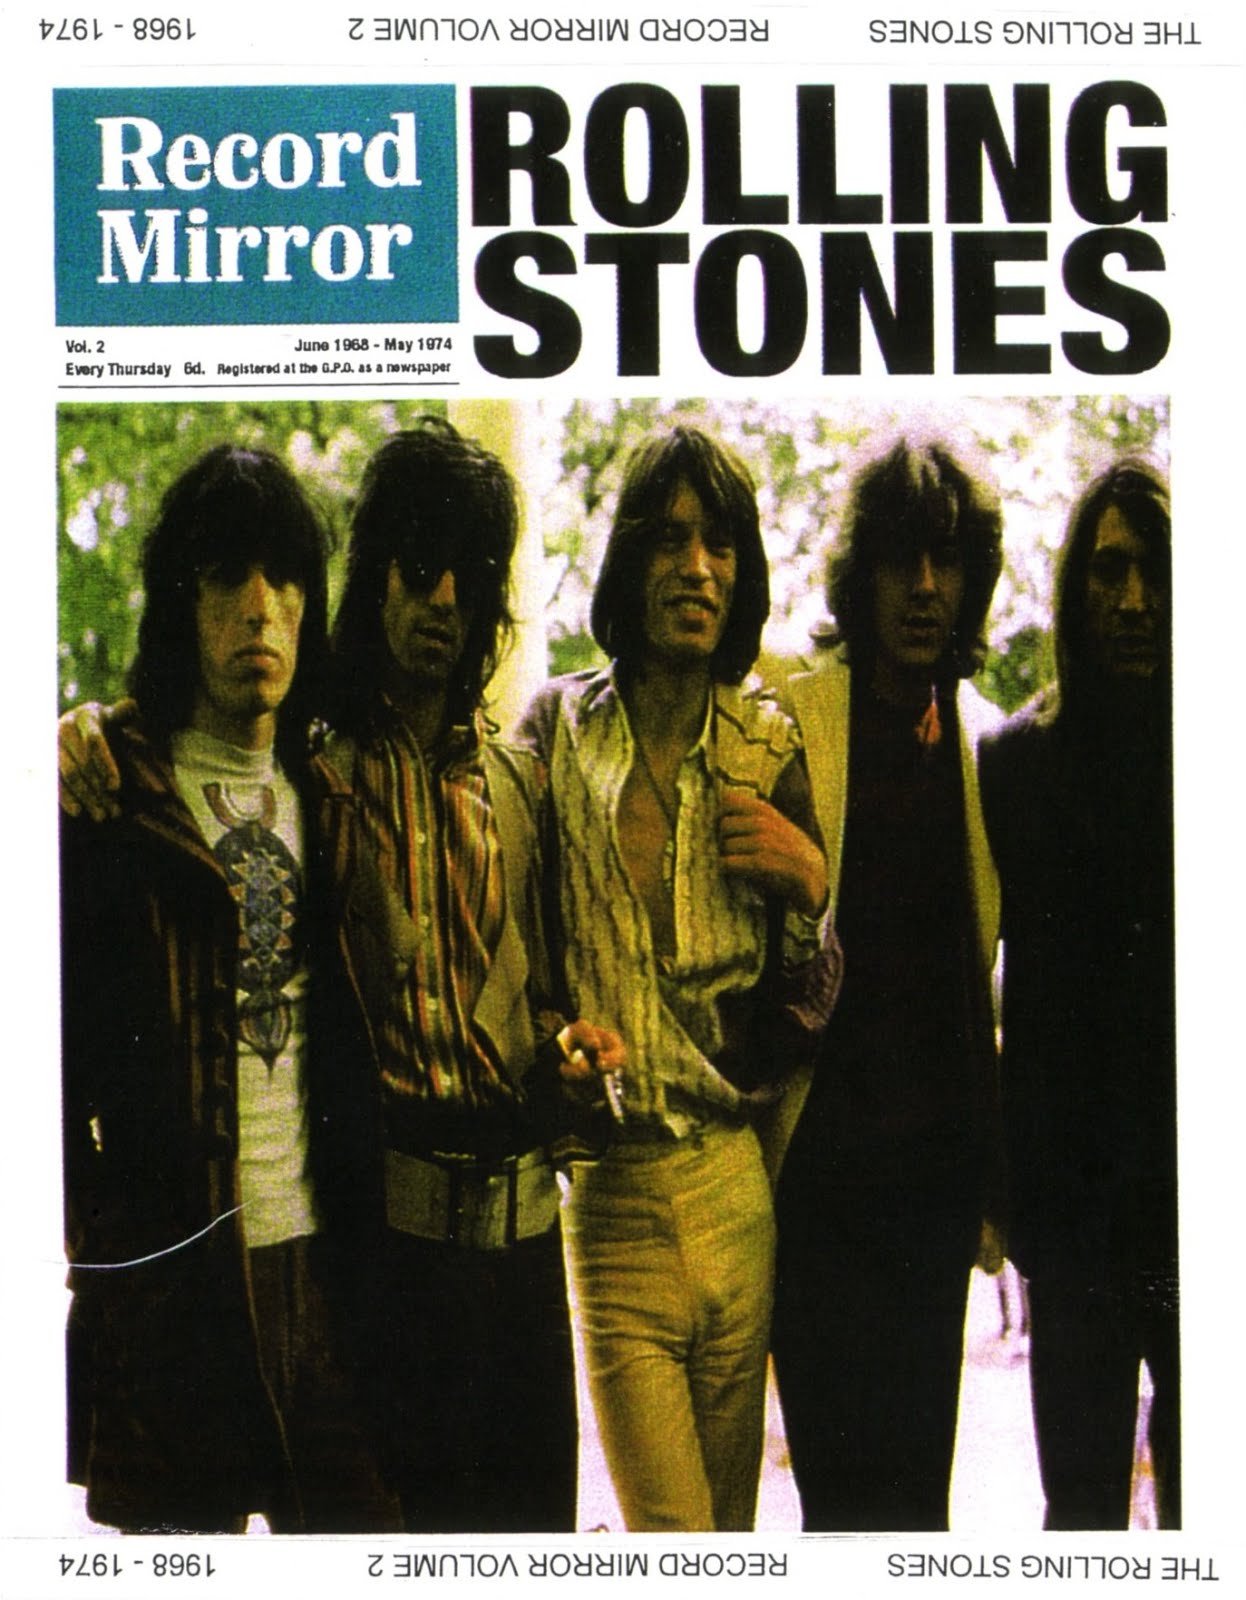 T.U.B.E.: The Rolling Stones - 1968-1974 - Record Mirror Vol. 2 (STU/FLAC)